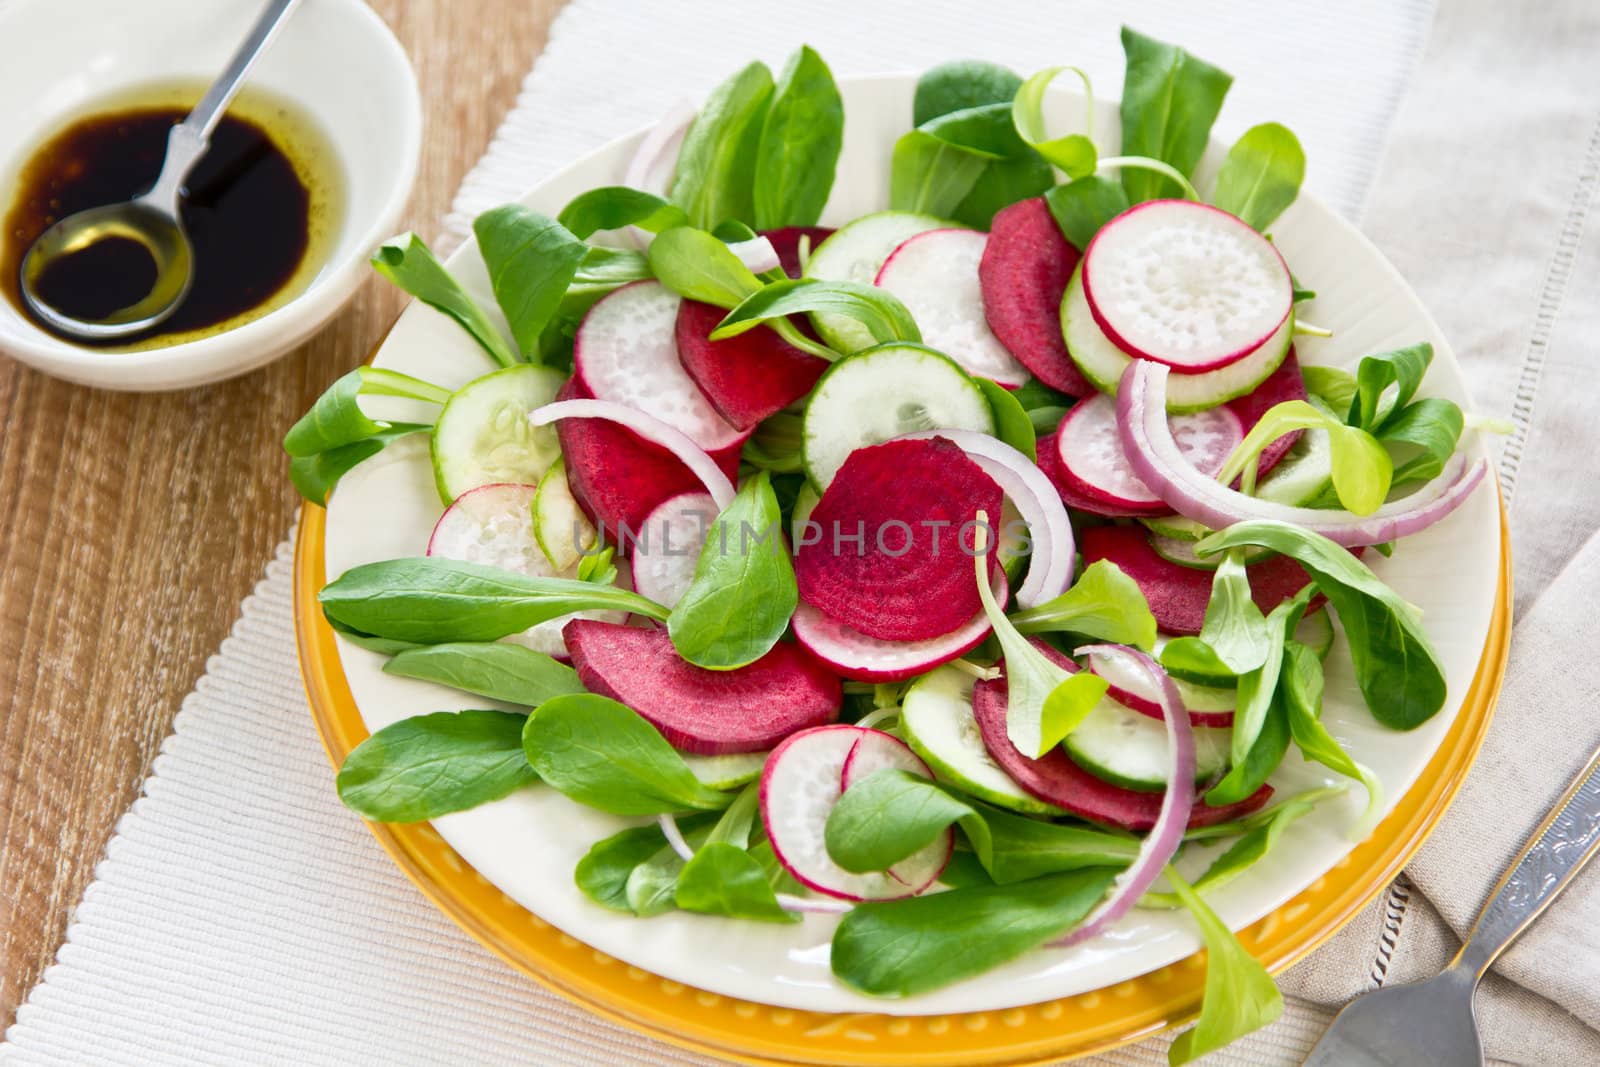 Beetroot,Radish and cucumber salad by vanillaechoes